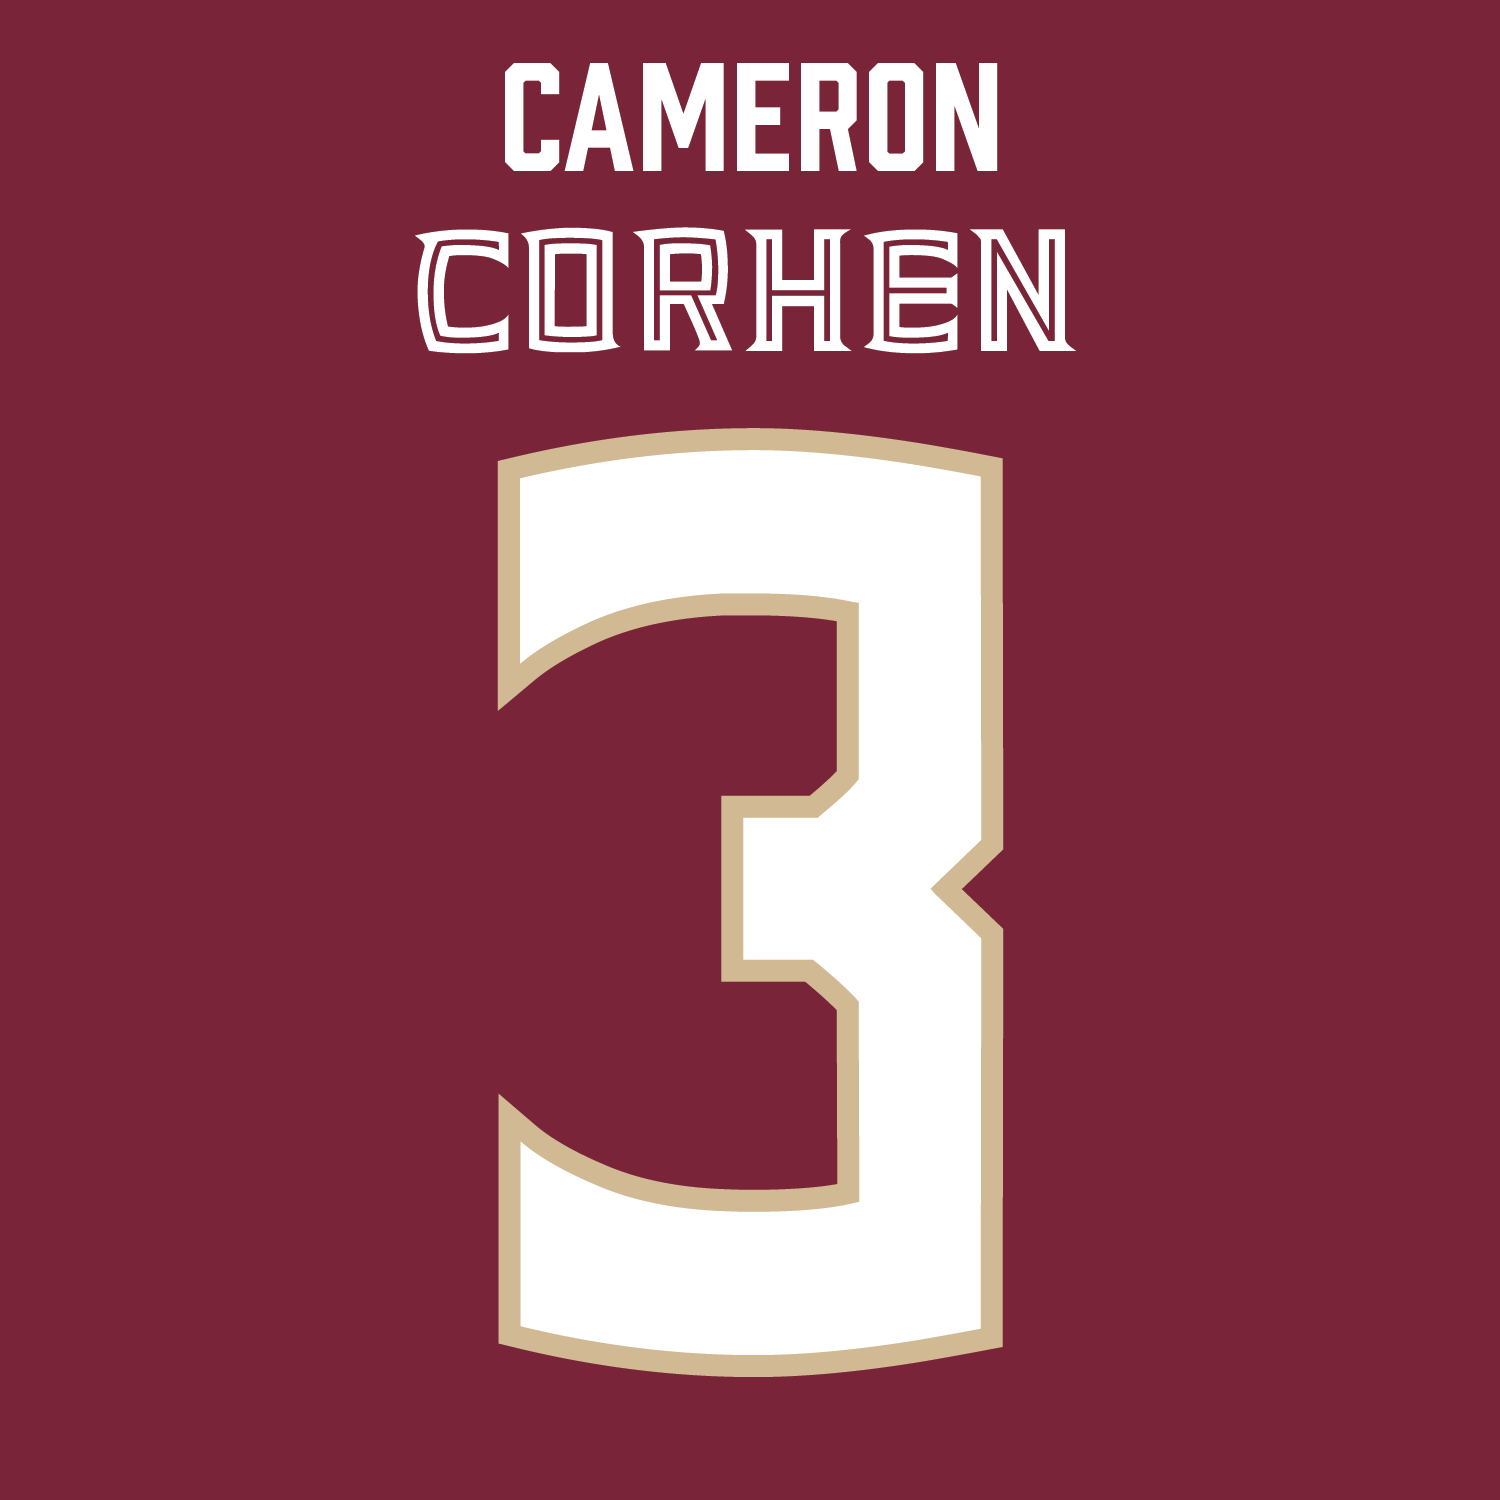 Cameron Corhen | #3